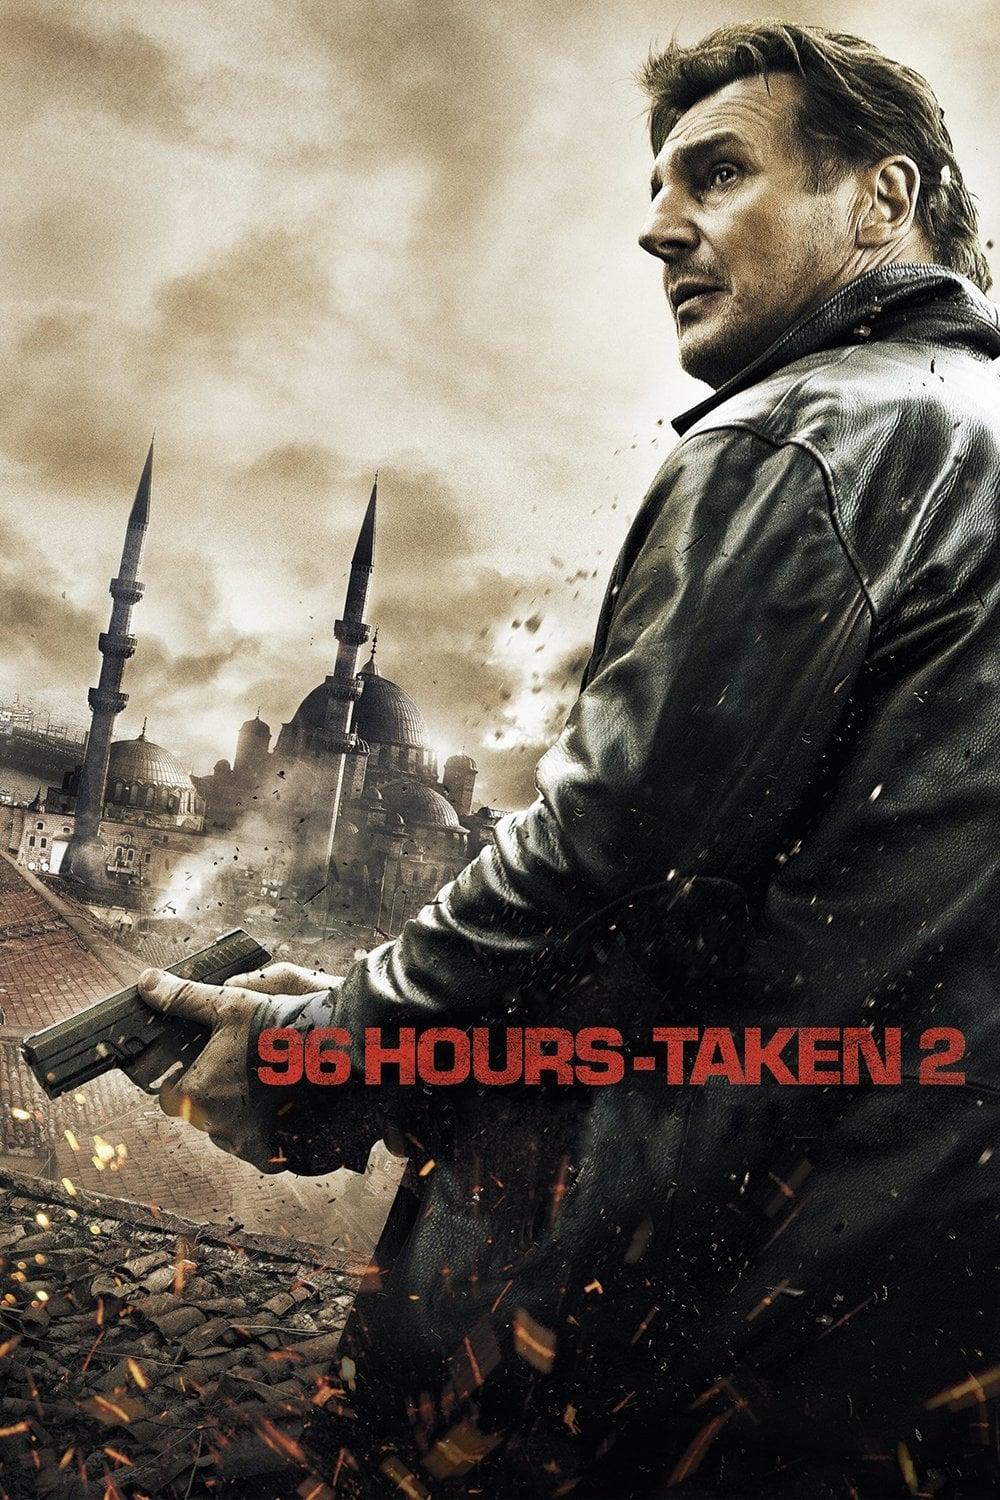 96 Hours - Taken 2 poster